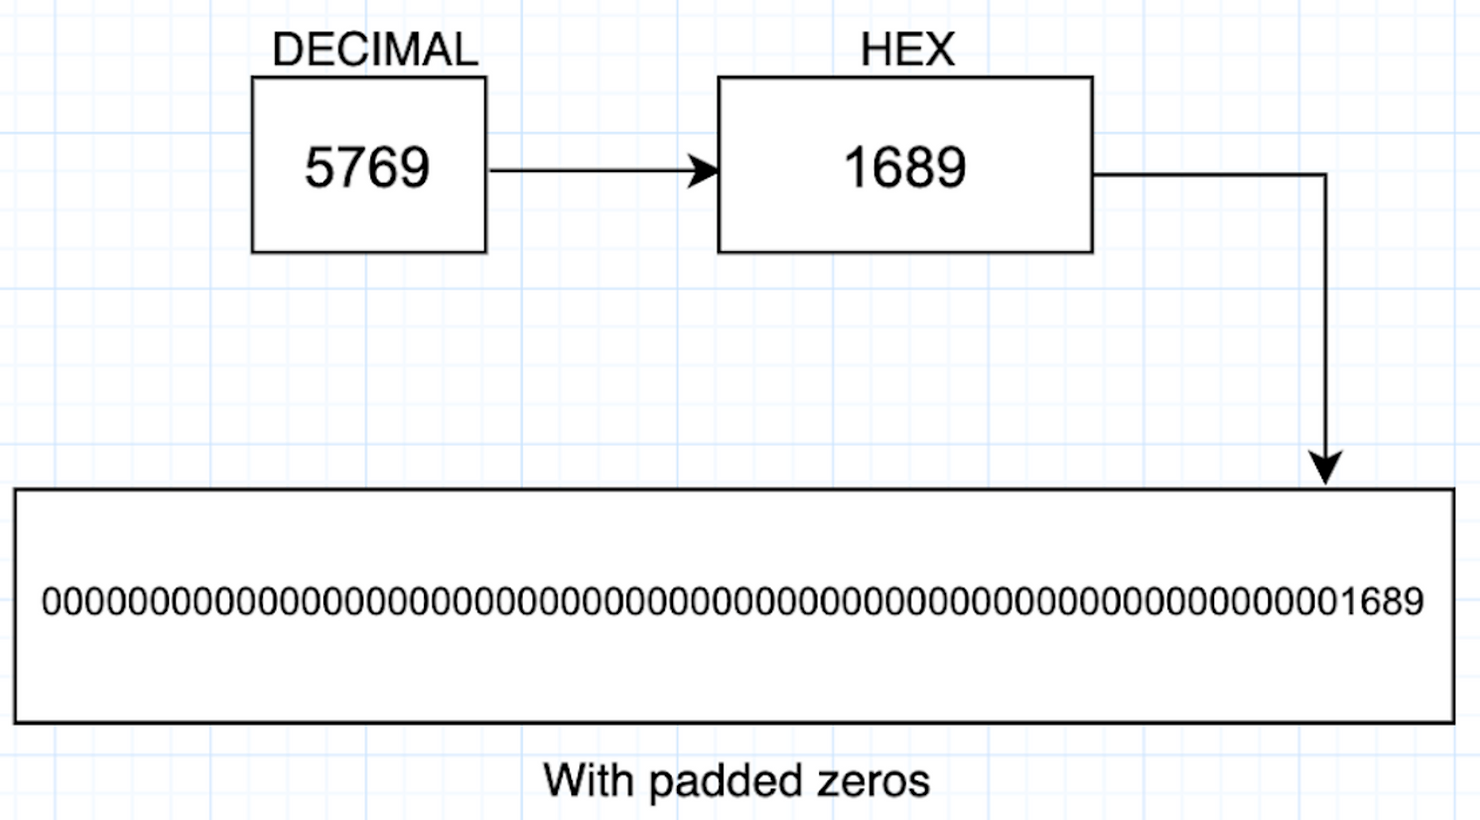 Image 13: Converting Decimal to Hex abi encoding